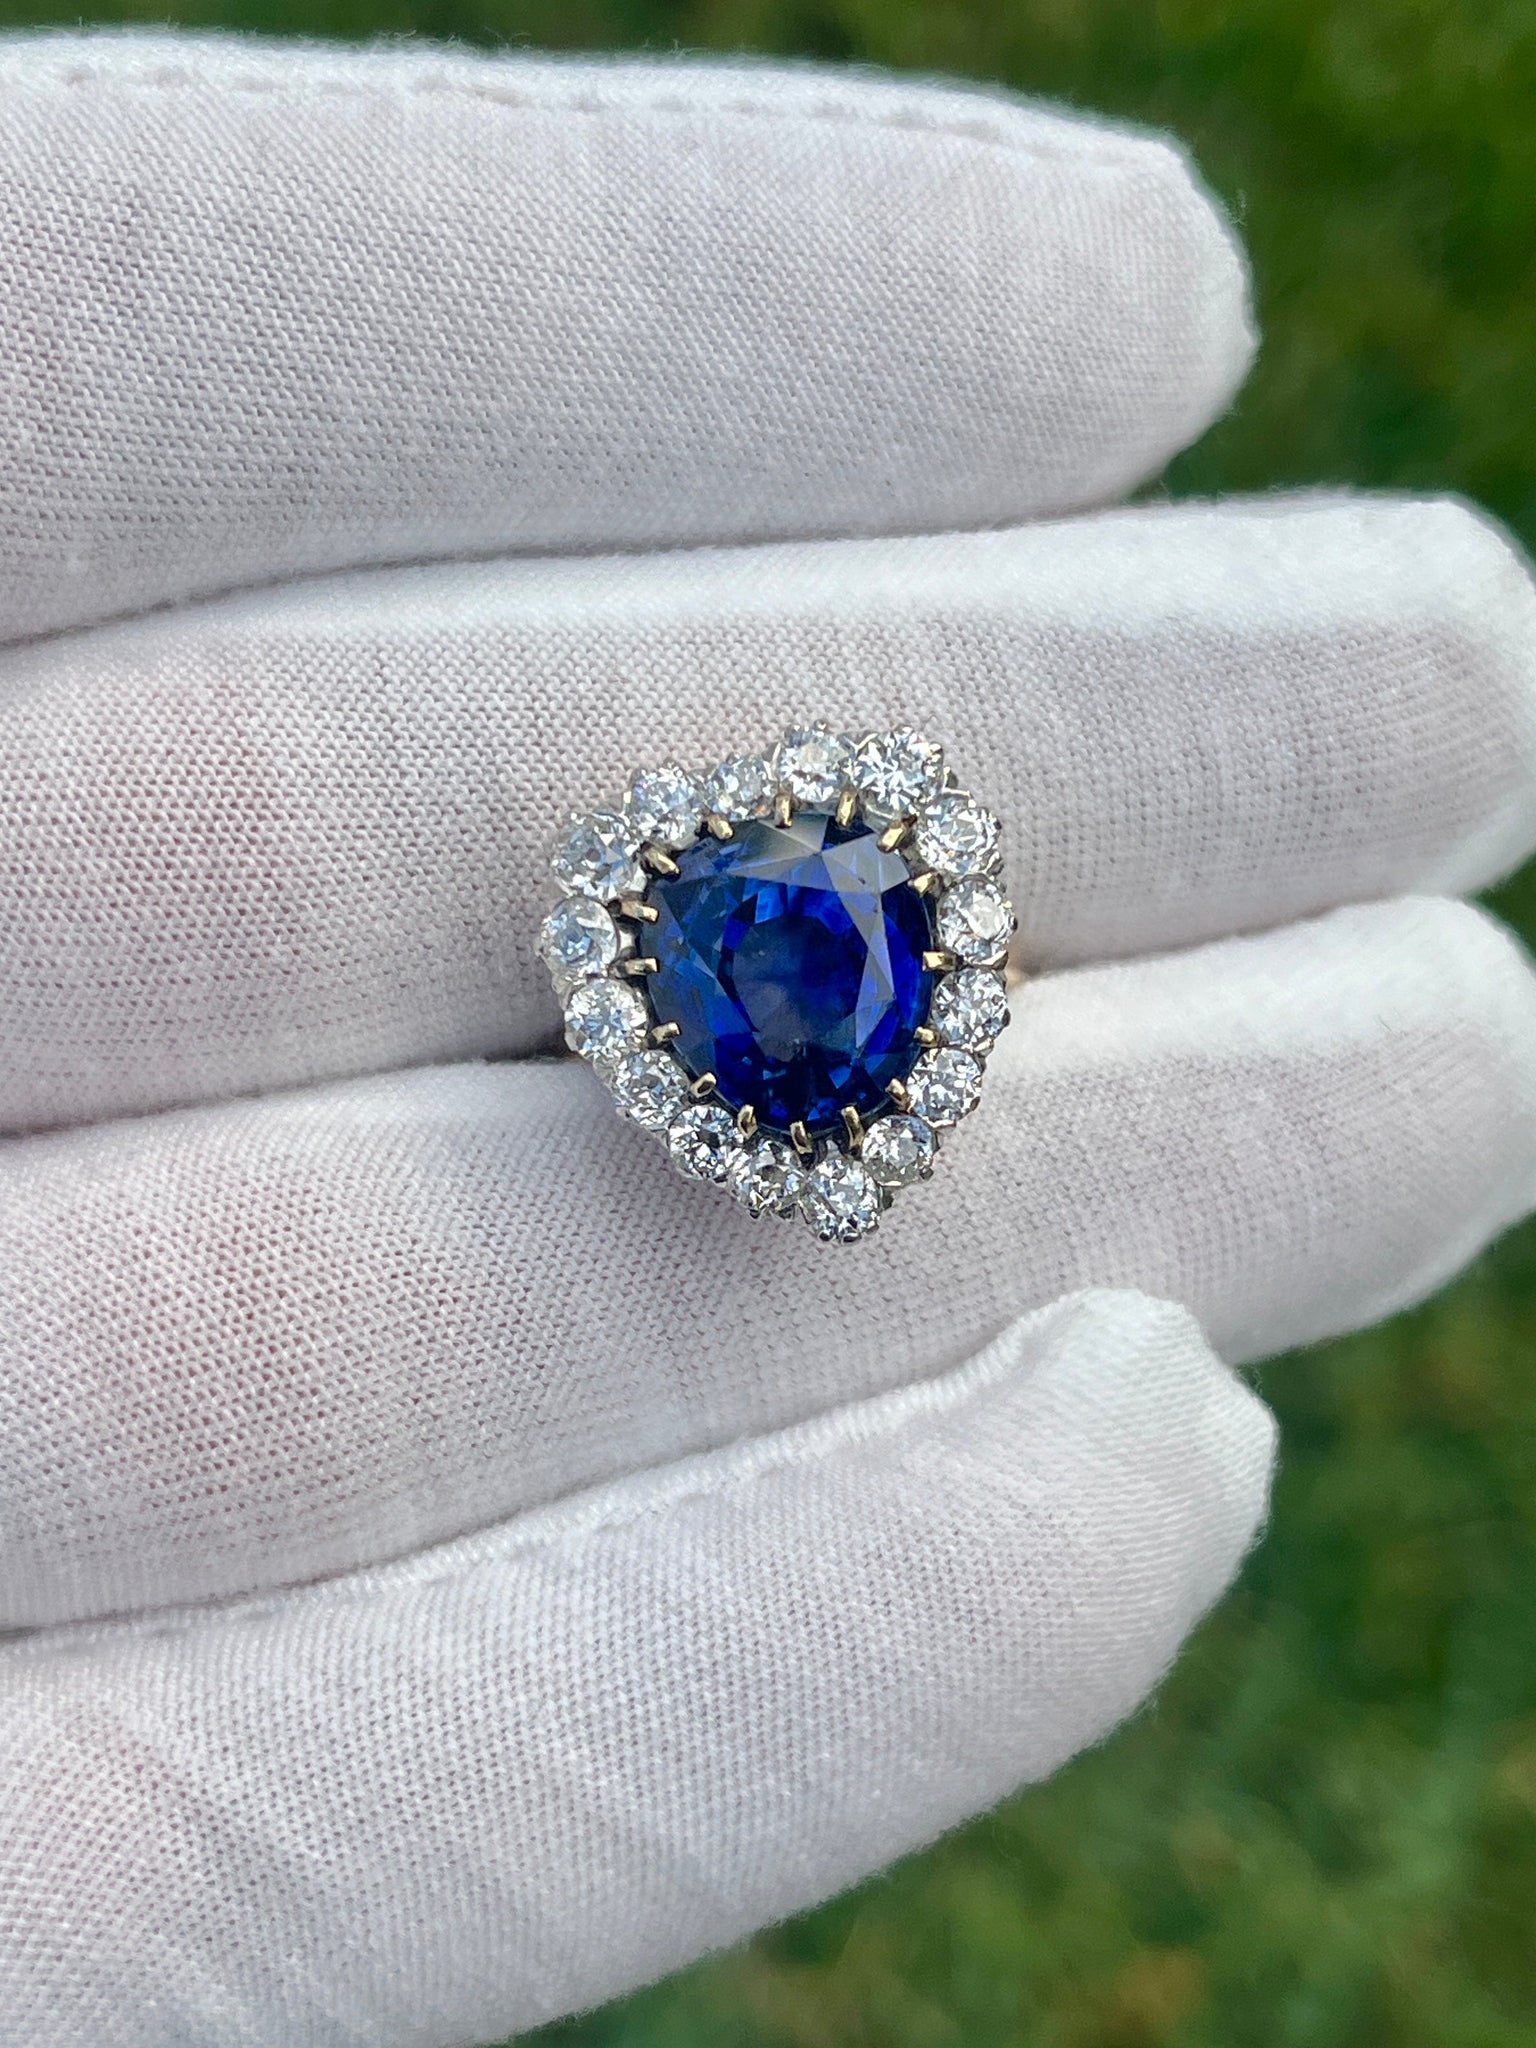 9 Carat No Heat Ceylon Blue Sapphire and Old Euro Cut Diamond Ring in 14K-Sapphire ring-ASSAY